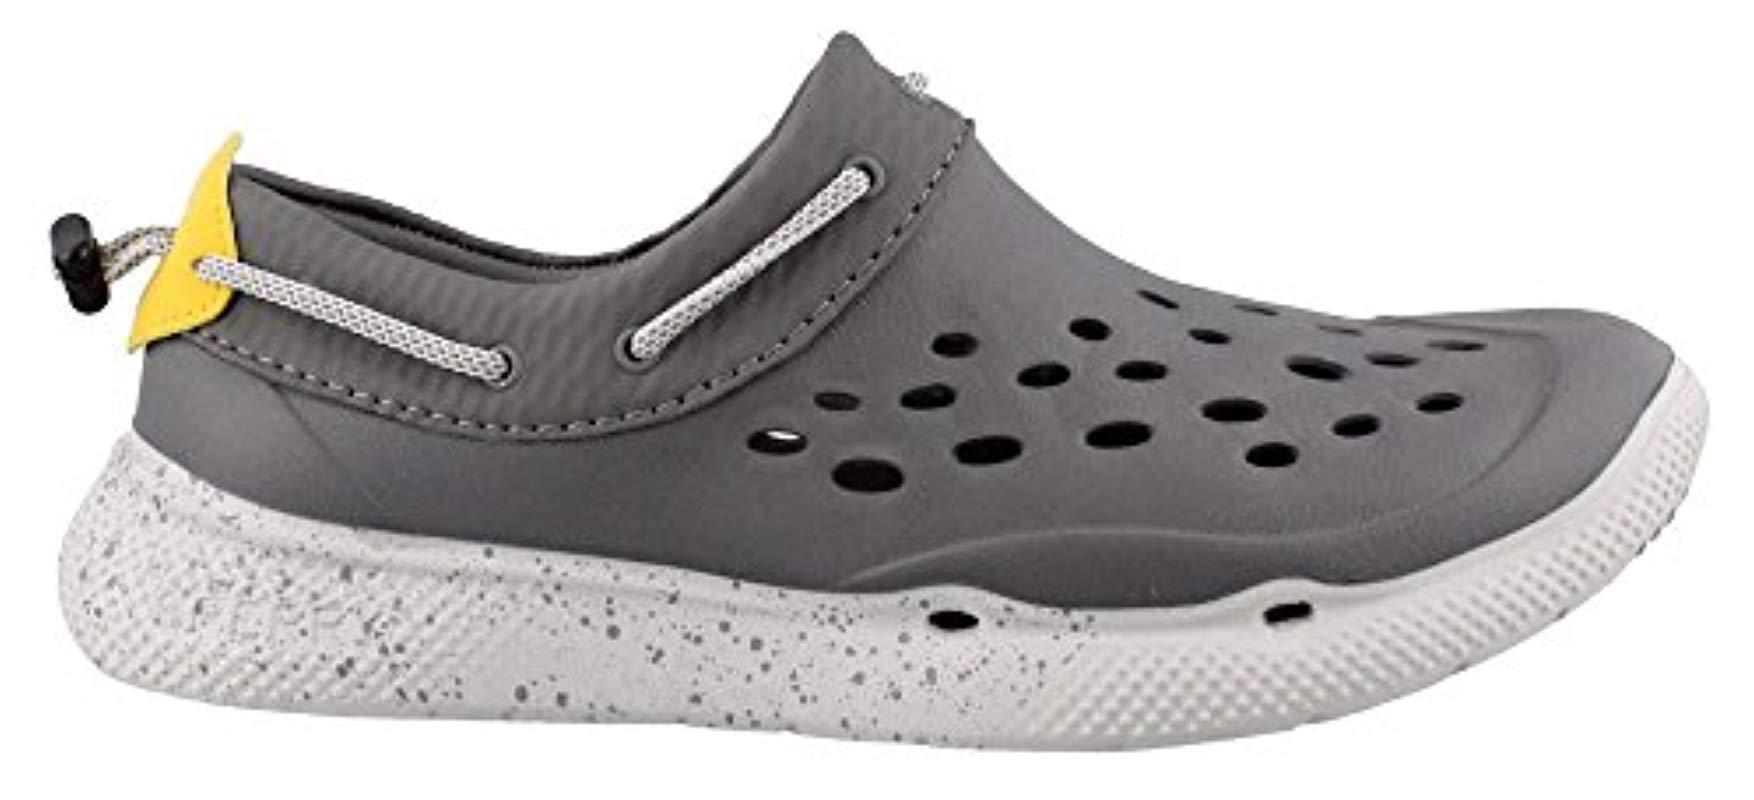 sperry men's water shoes